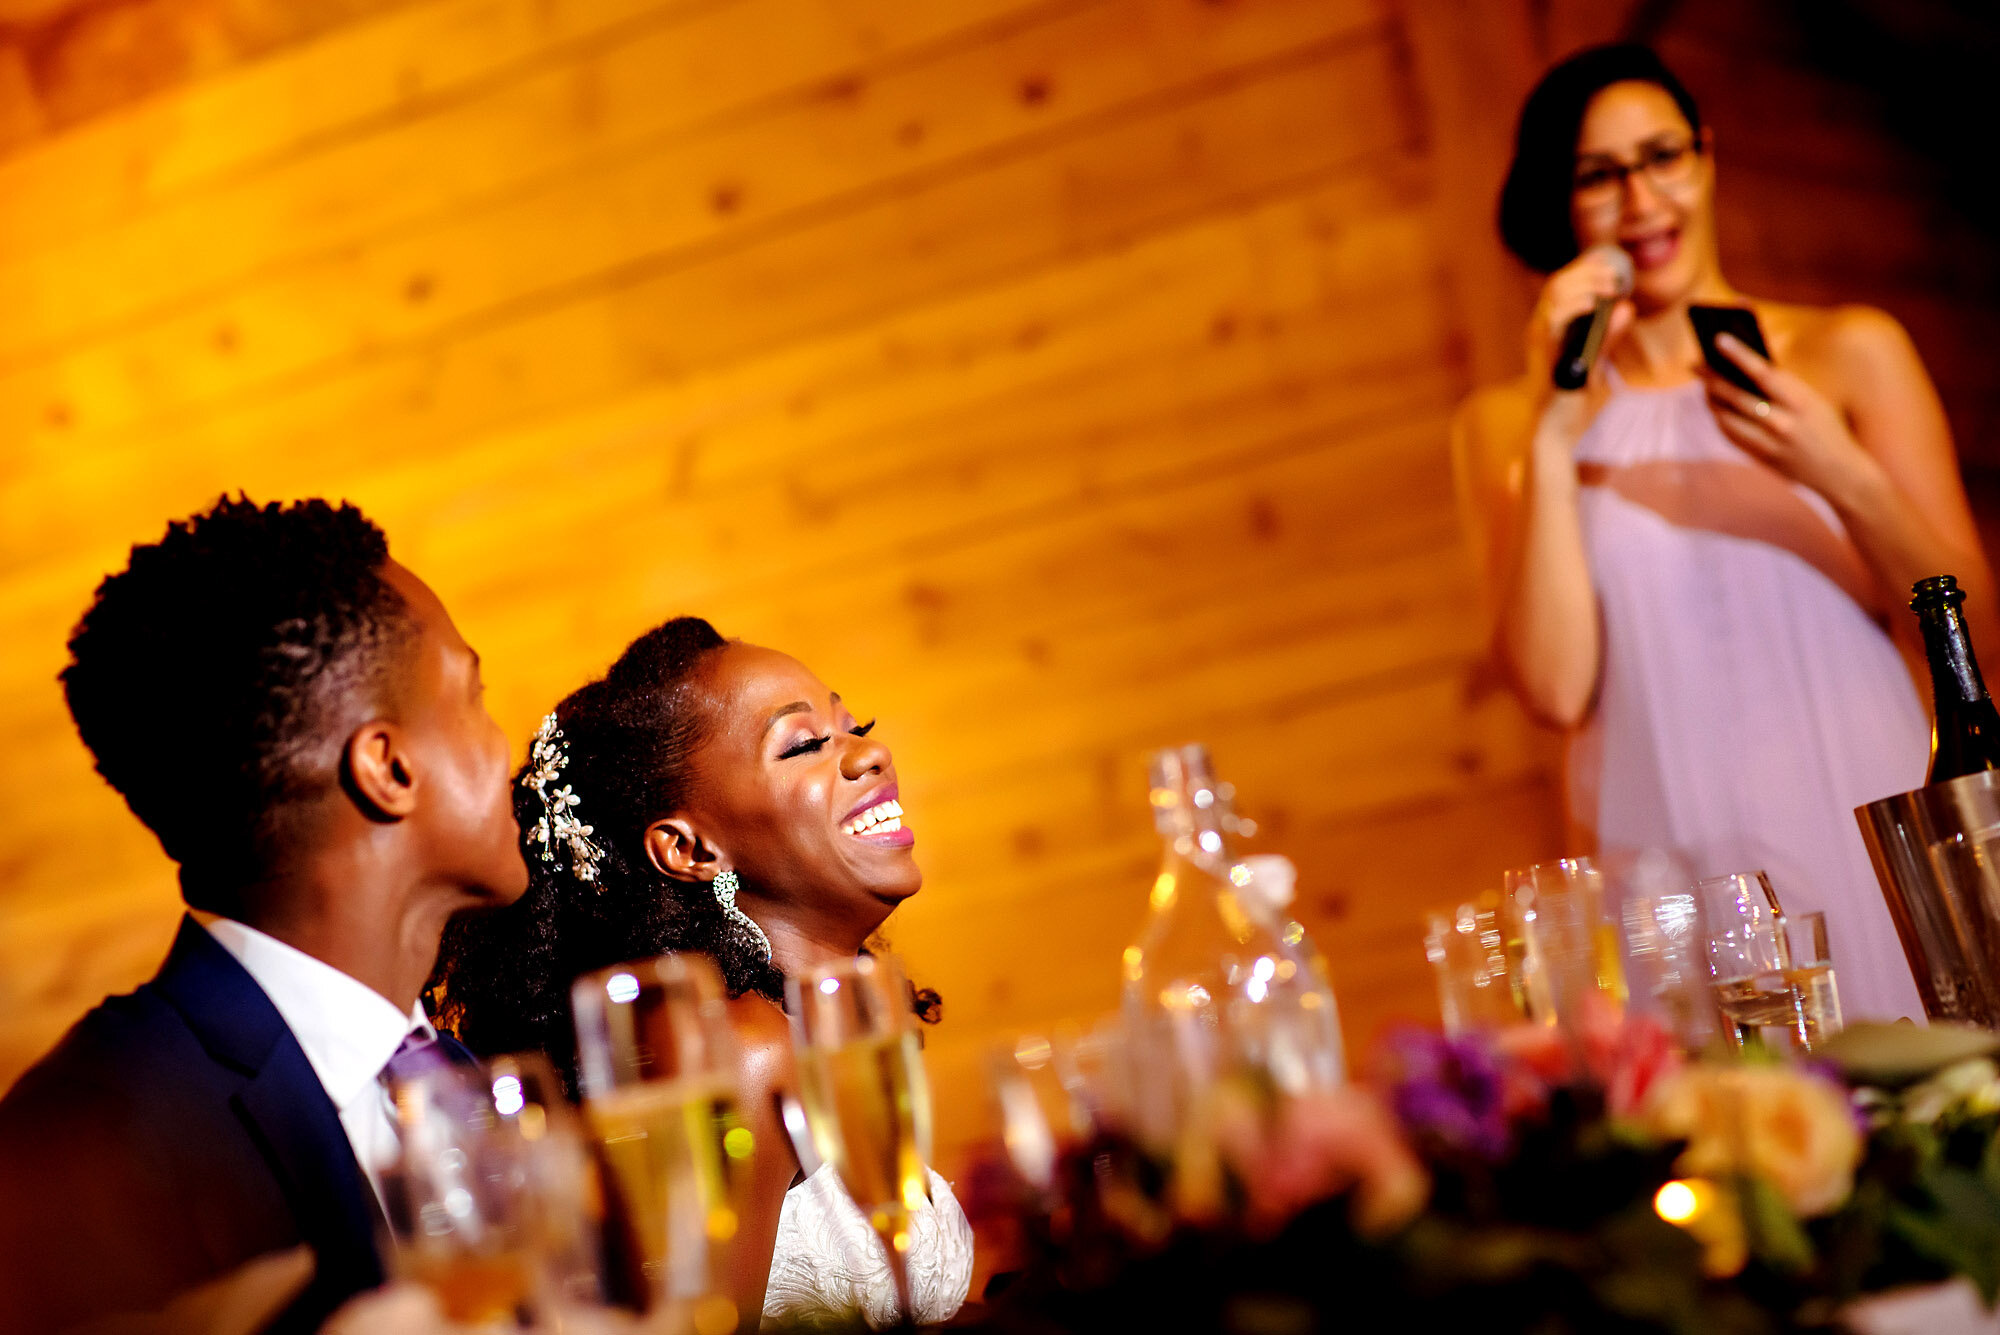 44-Austin-wedding-photographer-Jide-Alakija-reaction to maid of honors speech by couple.jpg.JPG